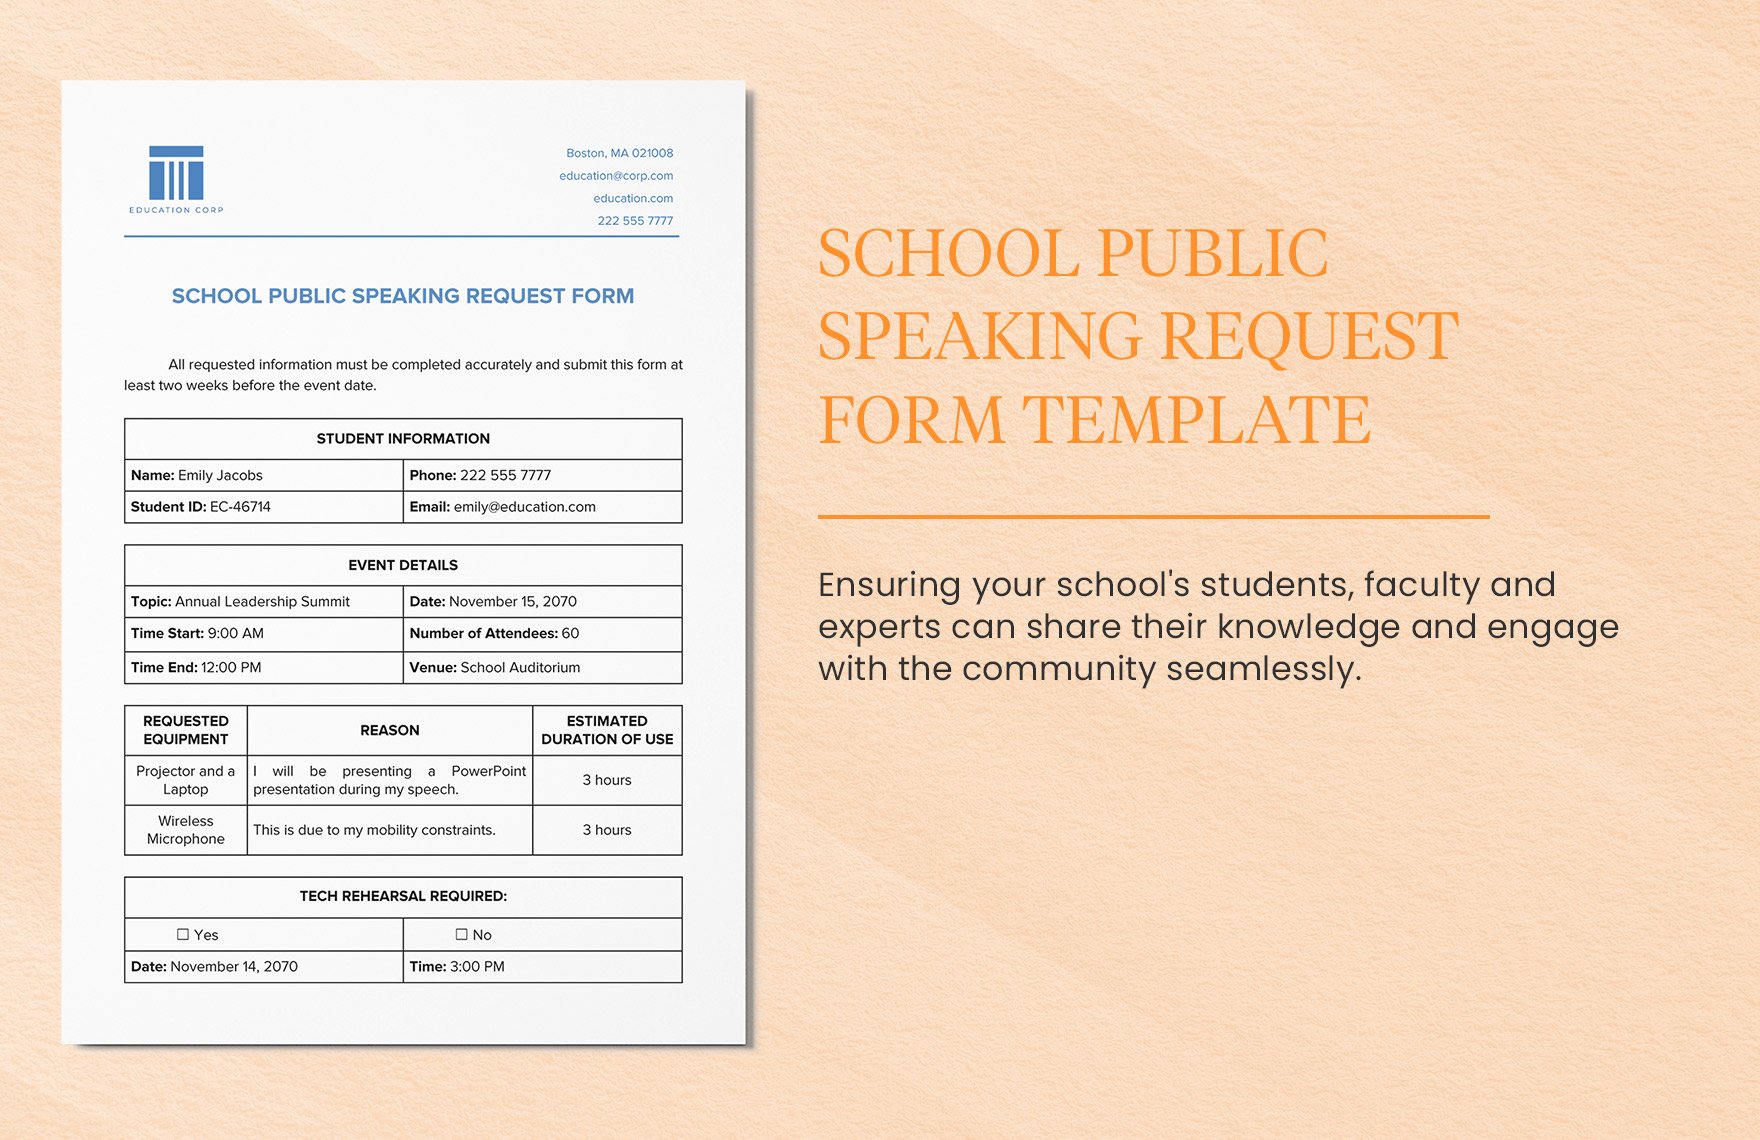 School Public Speaking Request Form Template in Word, Google Docs, PDF